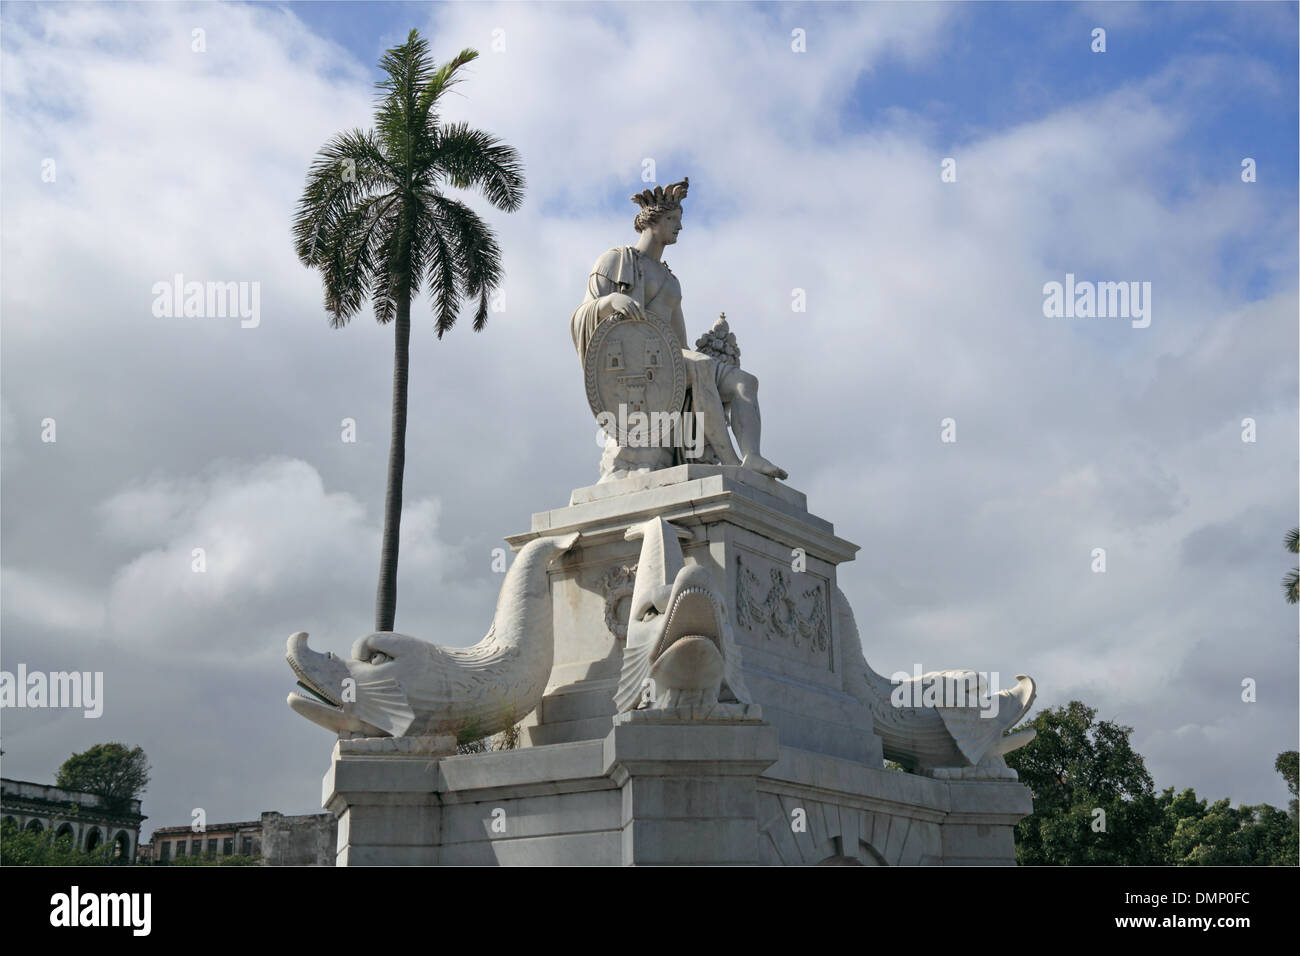 Fuente De La India Brunnen (auch bekannt als La Noble Habana), Alt-Havanna (La Habana Vieja), Kuba, Karibik, Mittelamerika Stockfoto